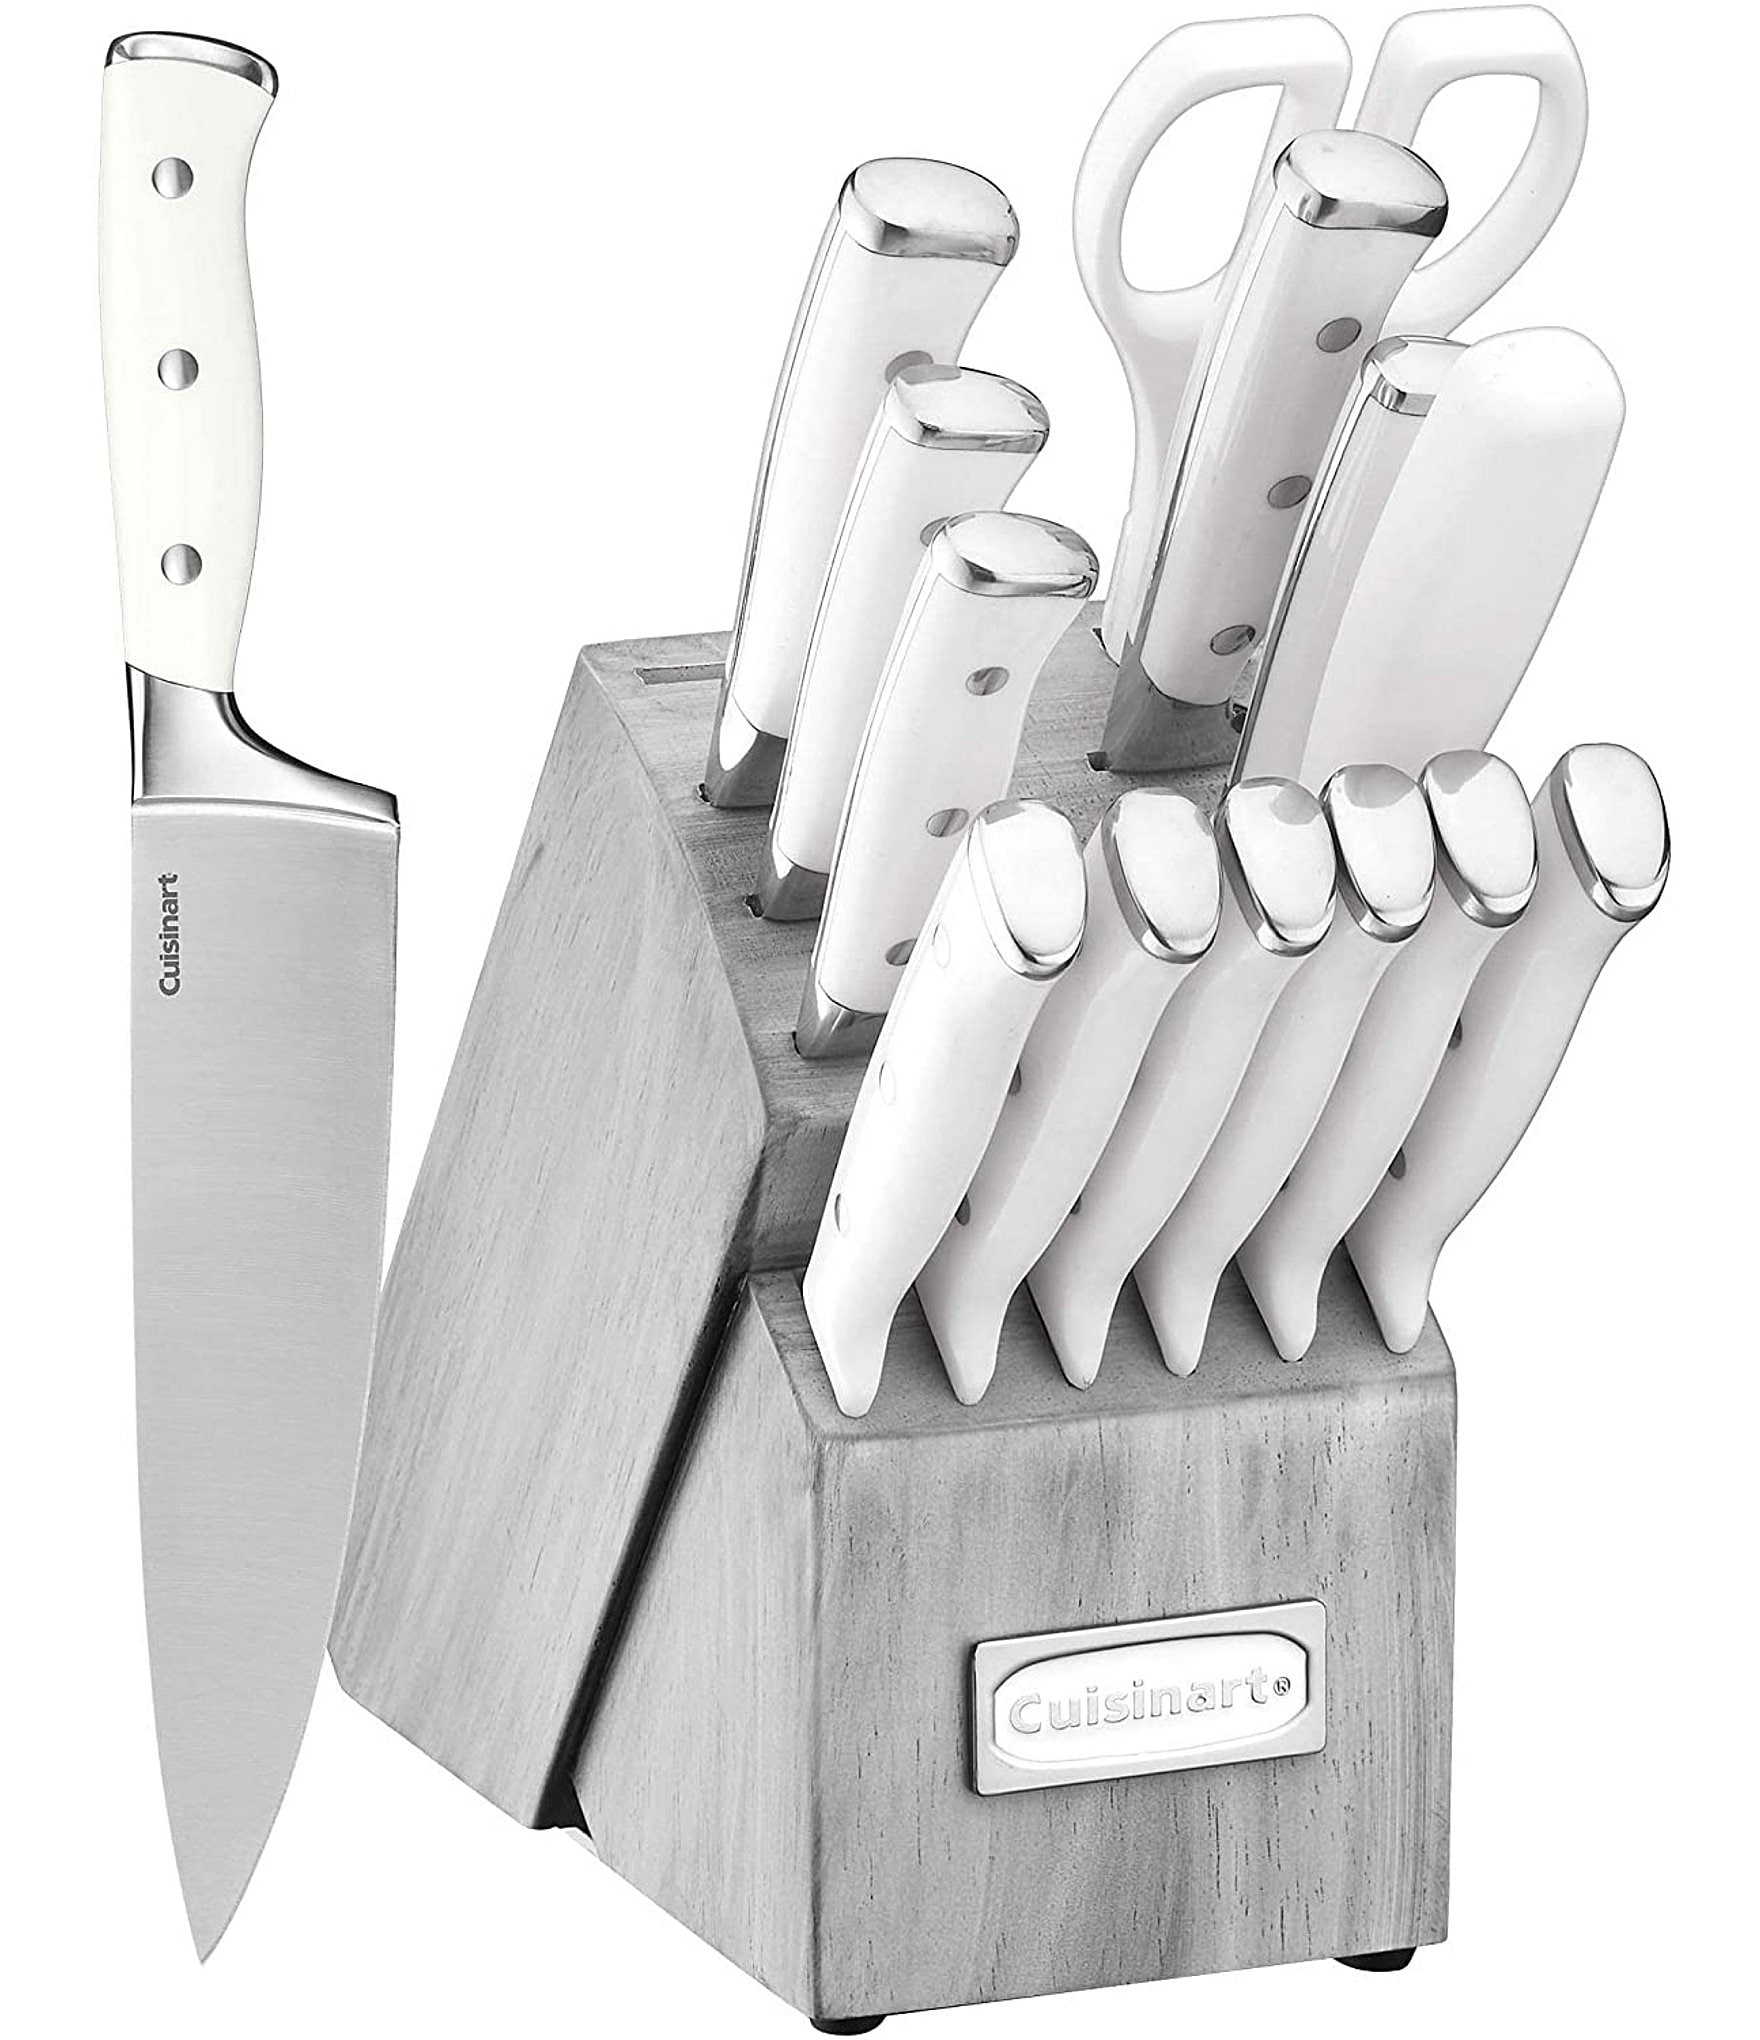 Cuisinart 15 Piece Knife Block Set